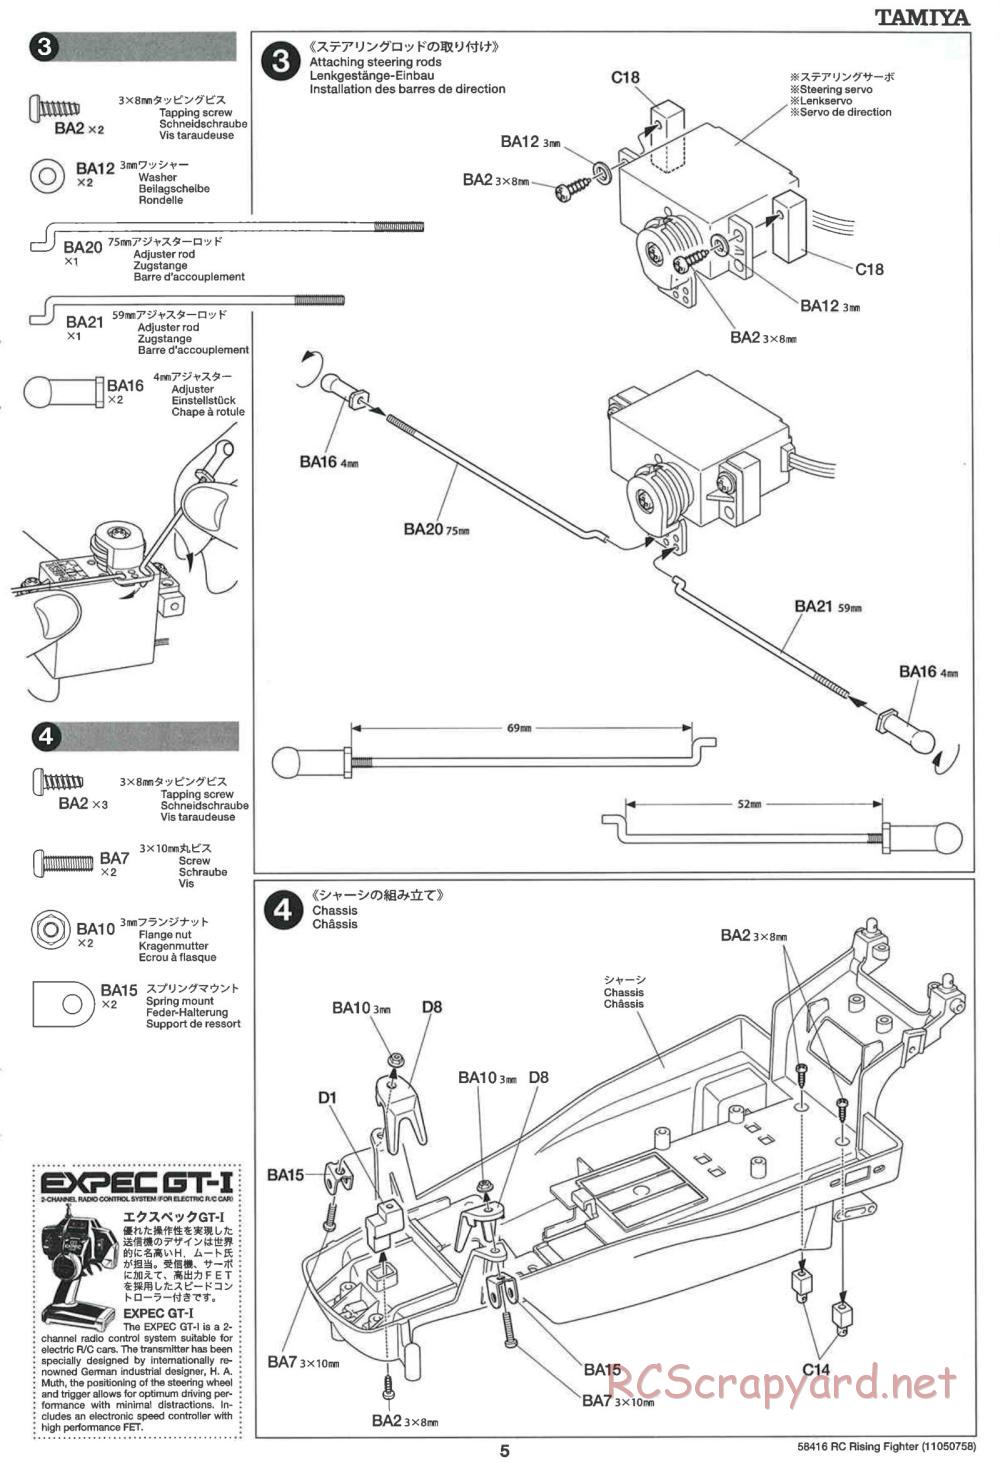 Tamiya - Rising Fighter Chassis - Manual - Page 5